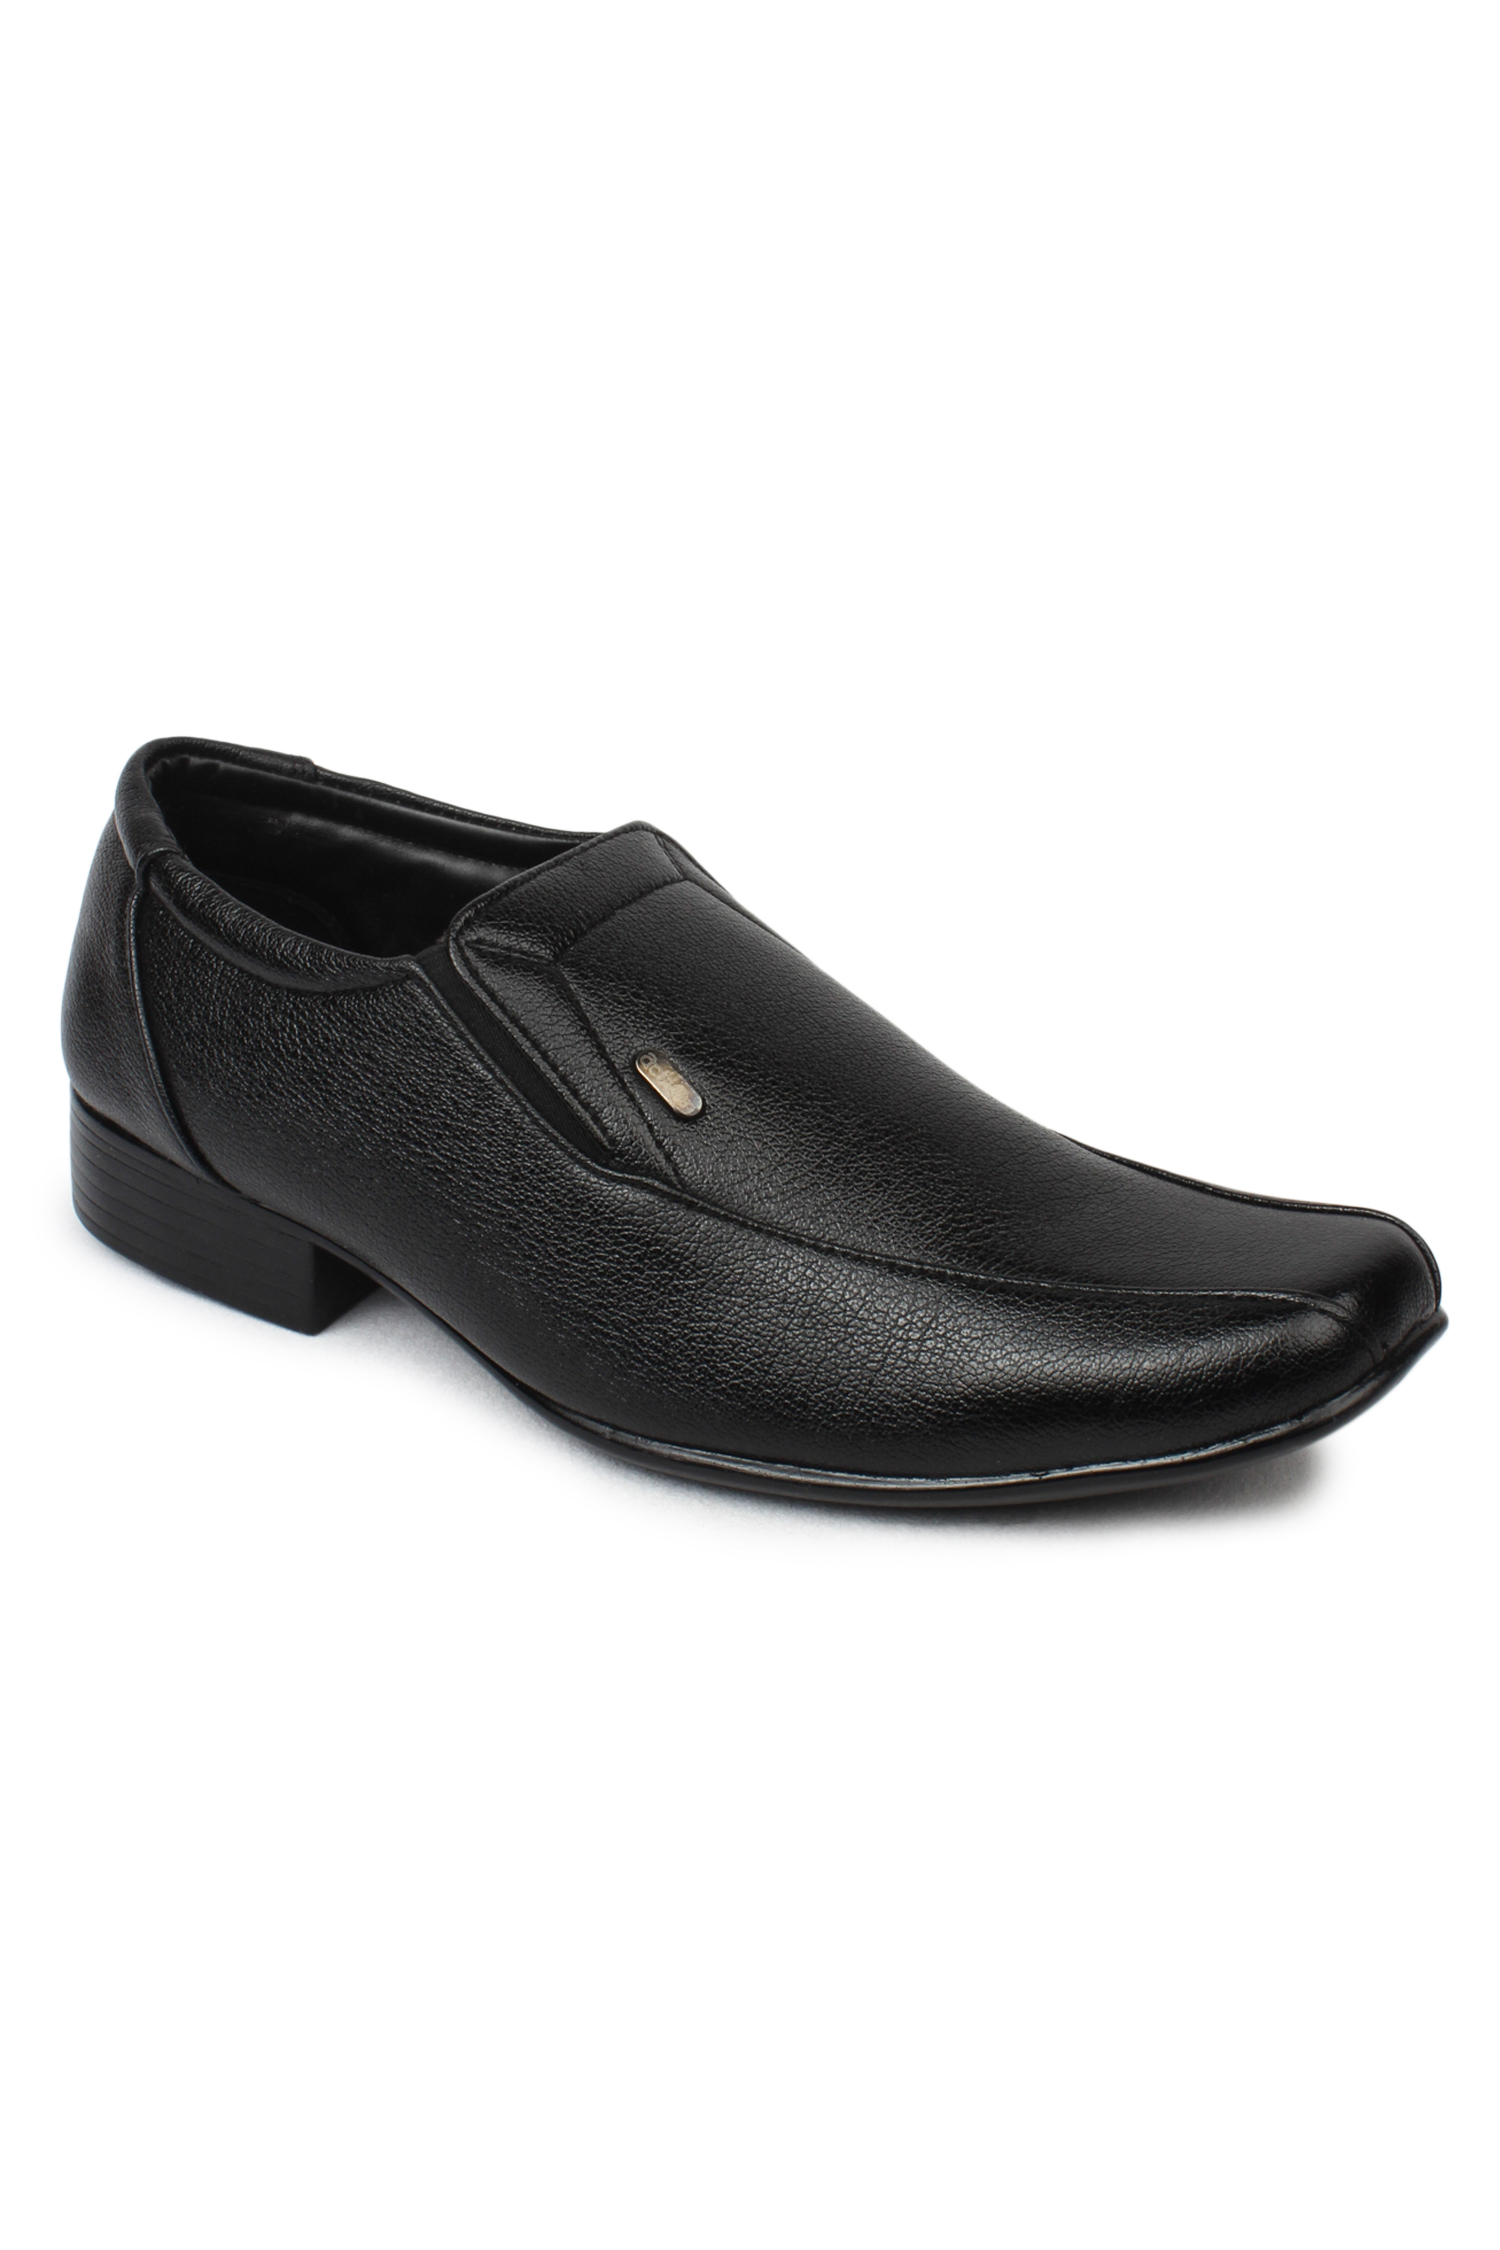 Buy Action Dotcom MenS Black Formal Slip On Shoes Online @ ₹909 from ...